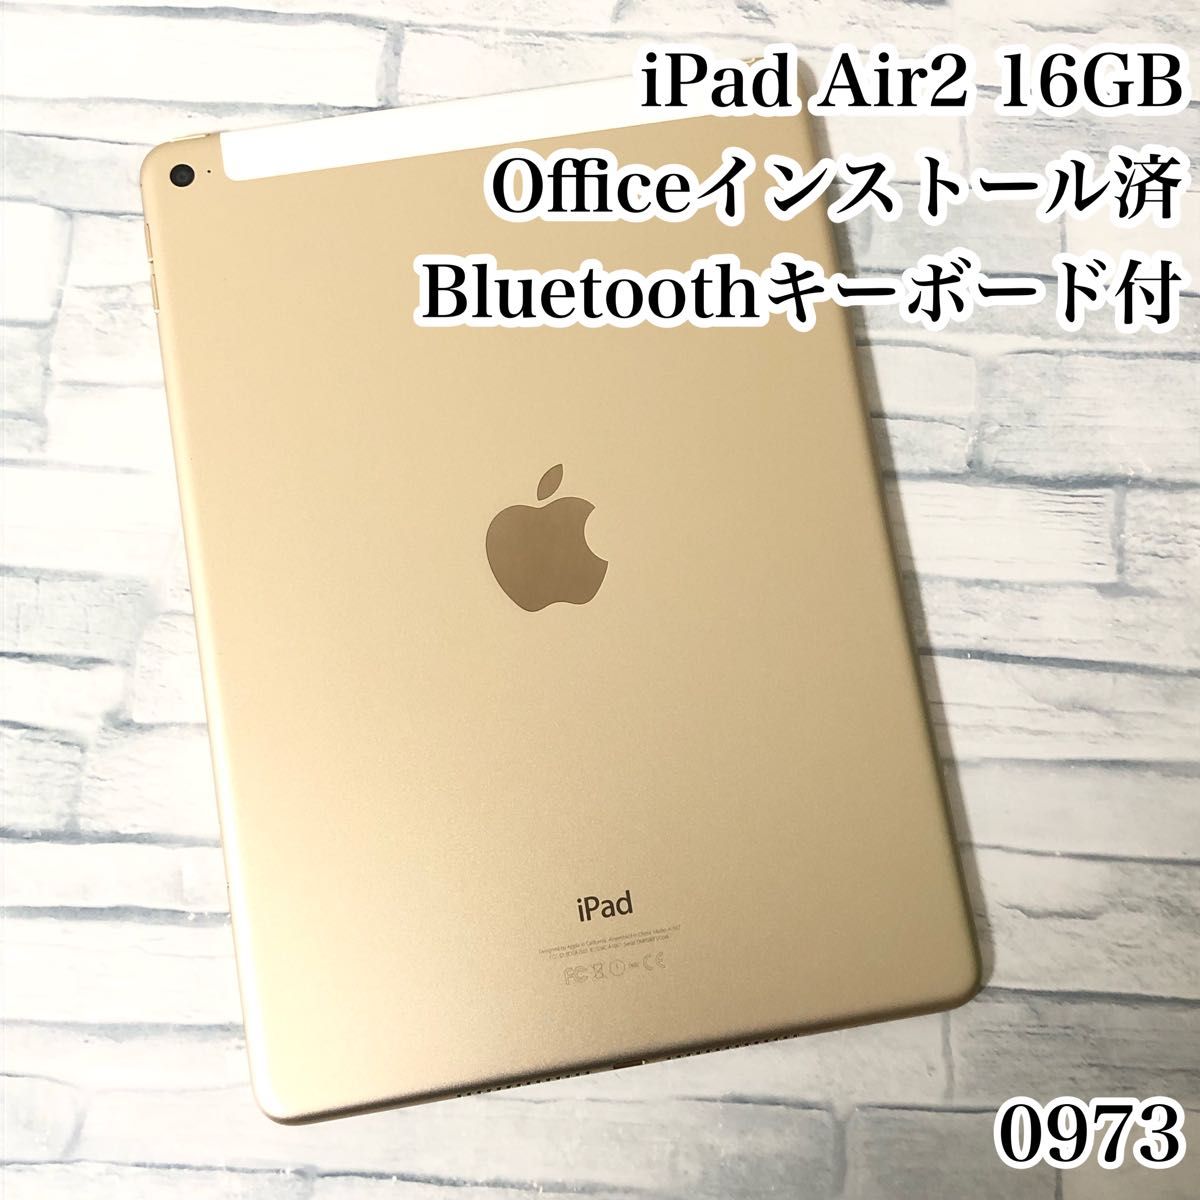 iPad Air2 16GB wifi+セルラーモデル 管理番号 0973｜PayPayフリマ